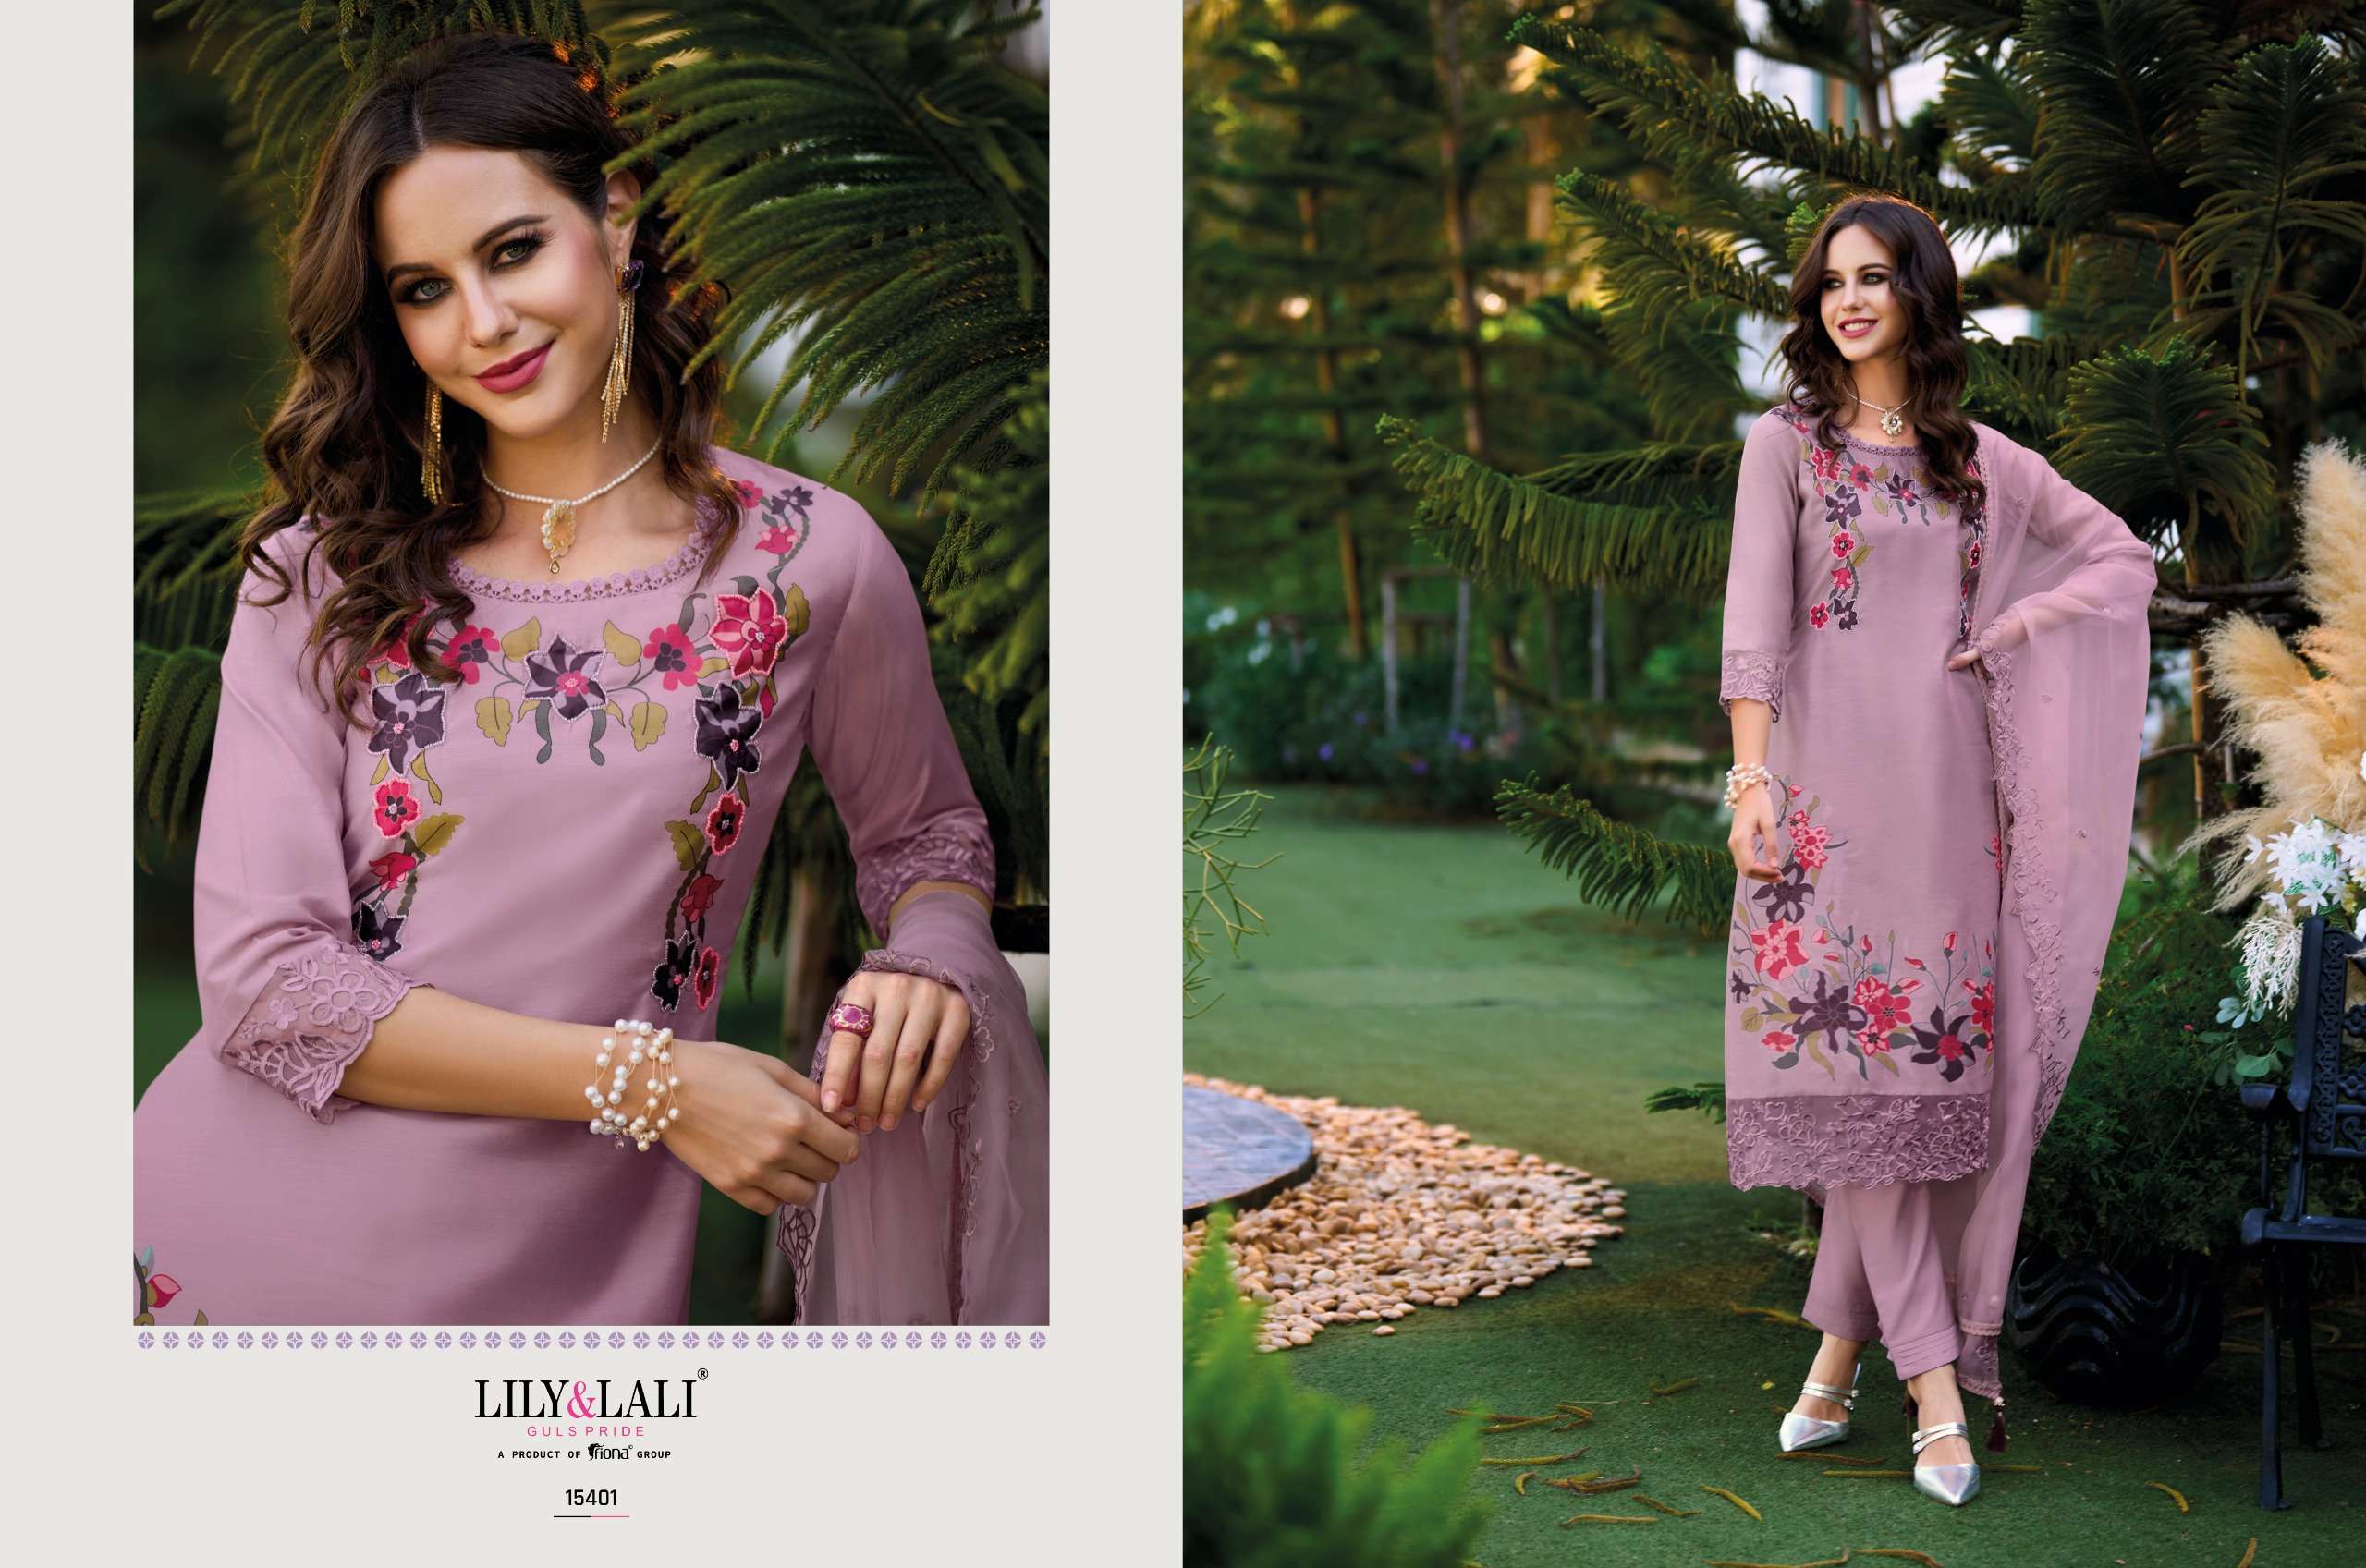 lily and lali manyata chanderi silk new and modern look top bottom with dupatta catalog